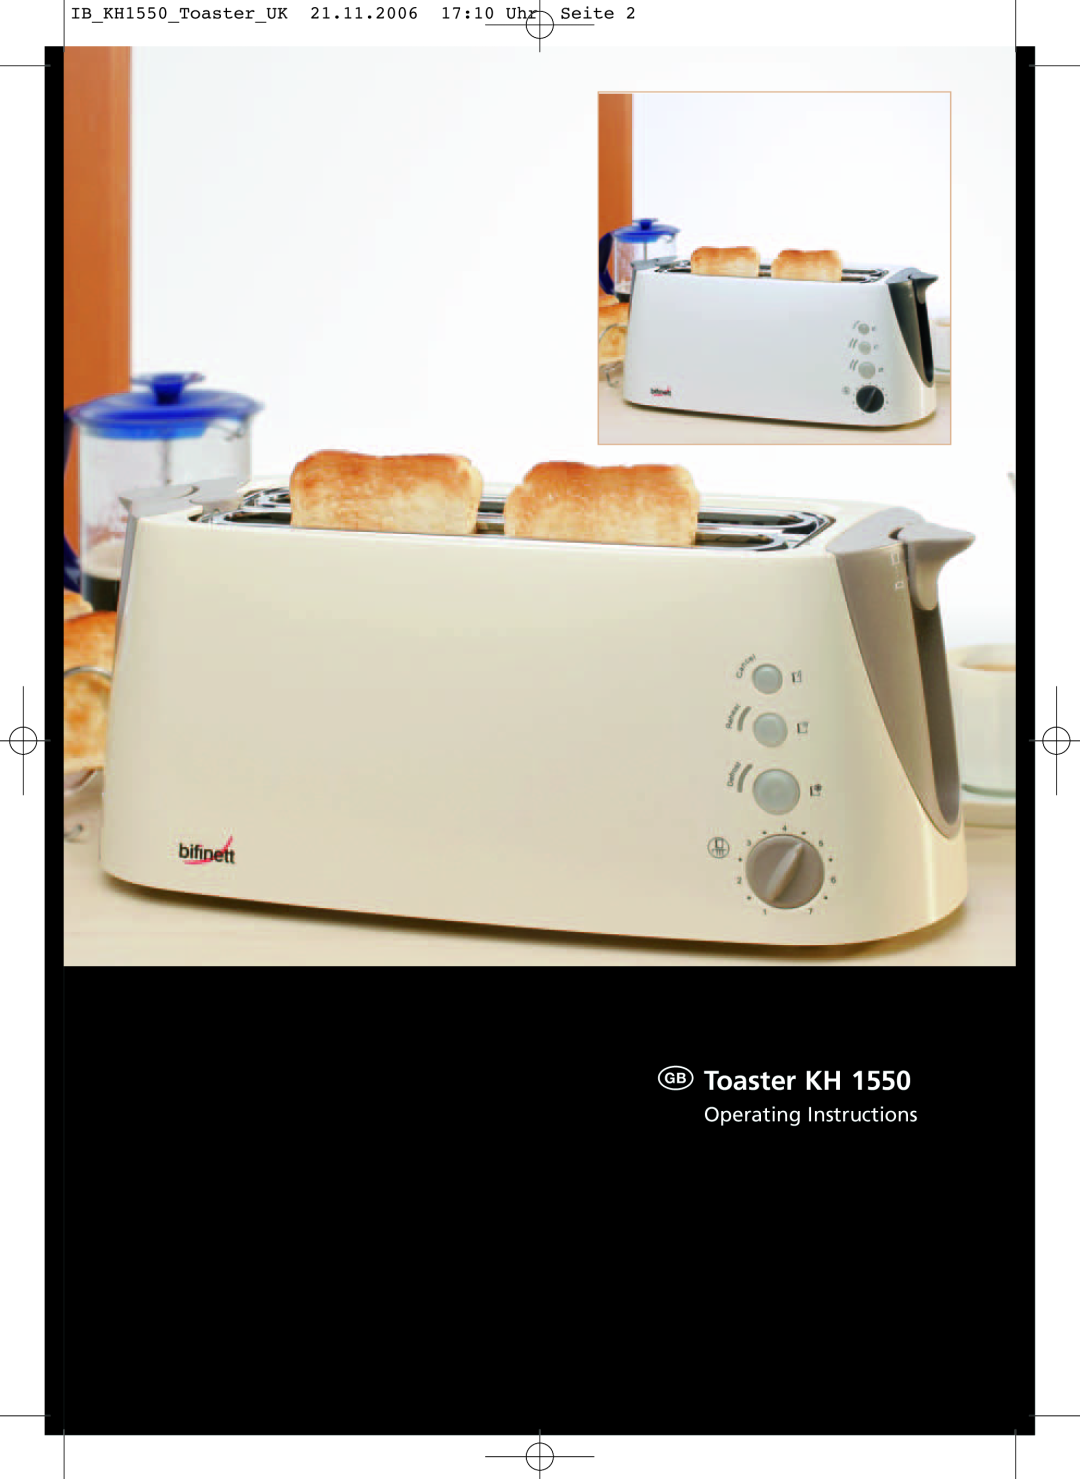 Kompernass KH 1550 manual Toaster KH, Operating Instructions, IB KH1550 Toaster UK 21.11.2006 17 10 Uhr Seite 